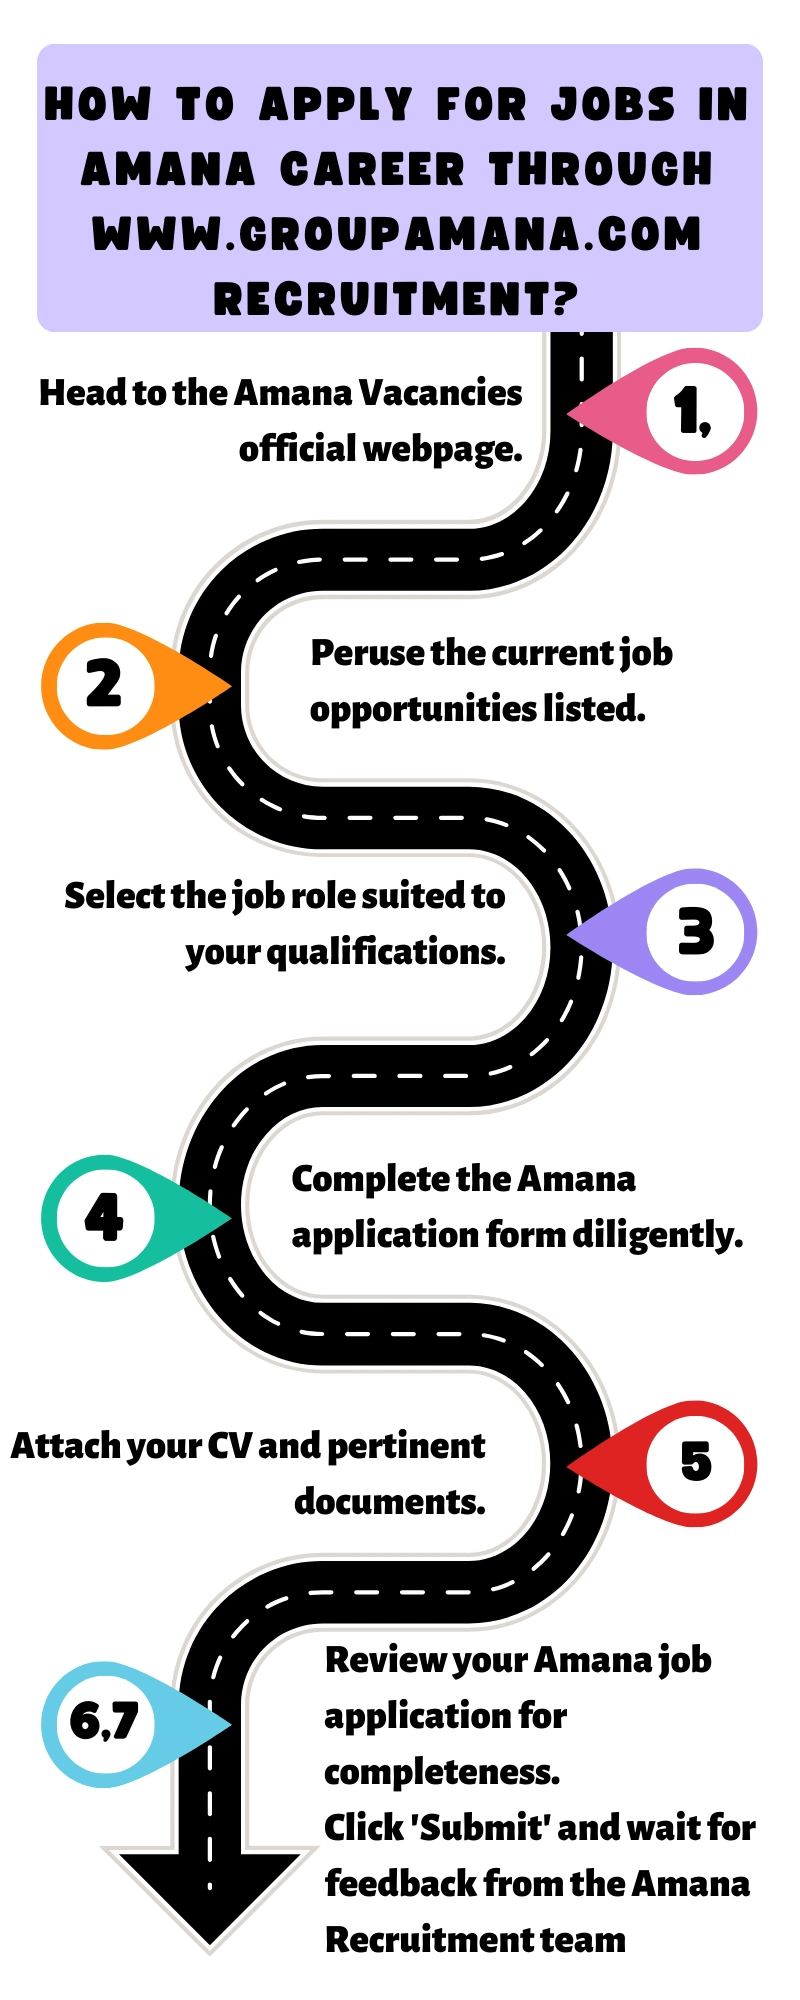 How to Apply for Jobs in Amana Career through www.groupamana.com recruitment_